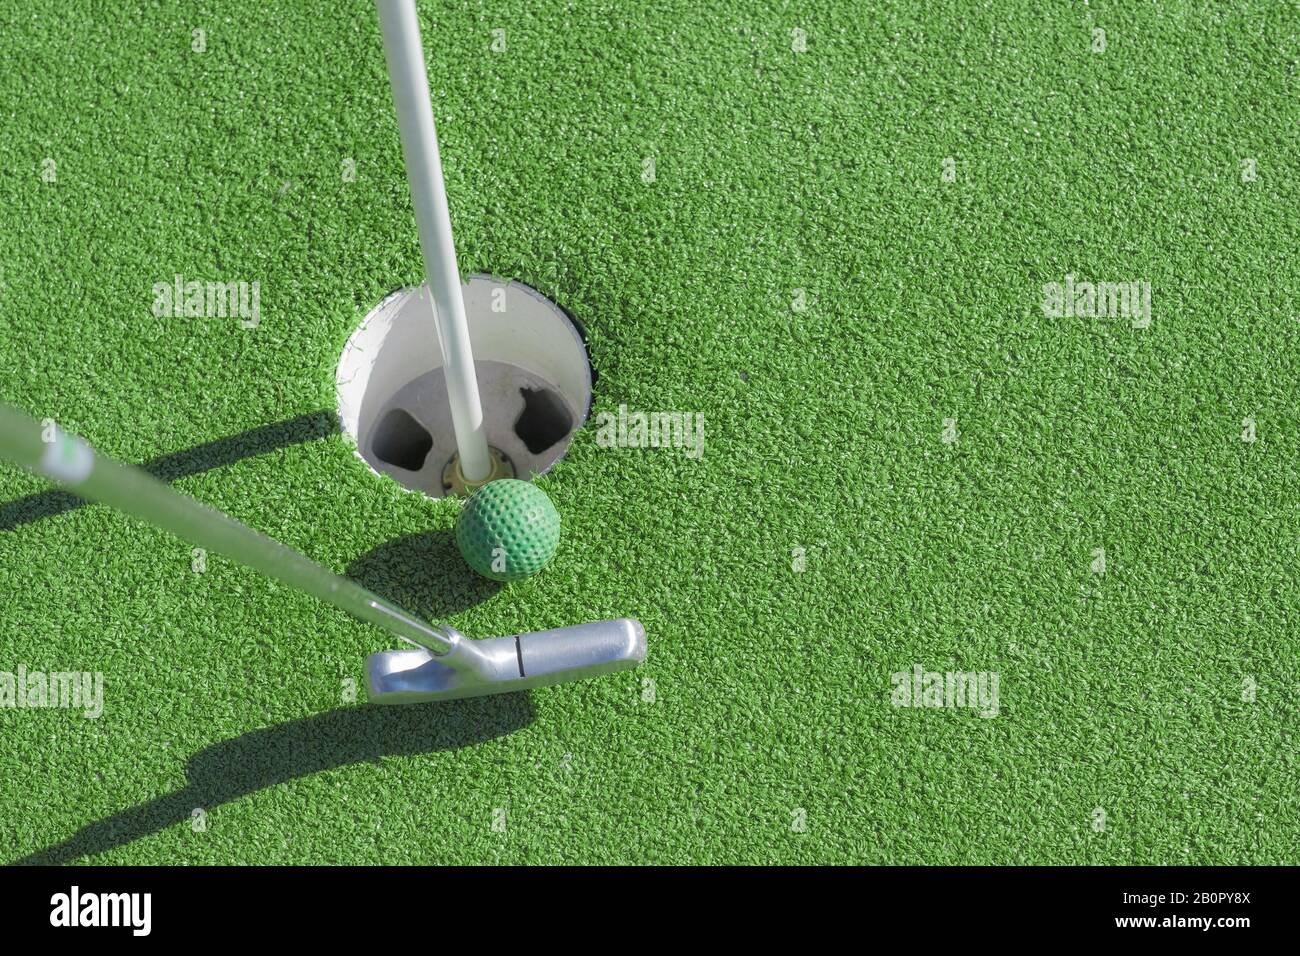 Mini golf club, ball and hole Stock Photo